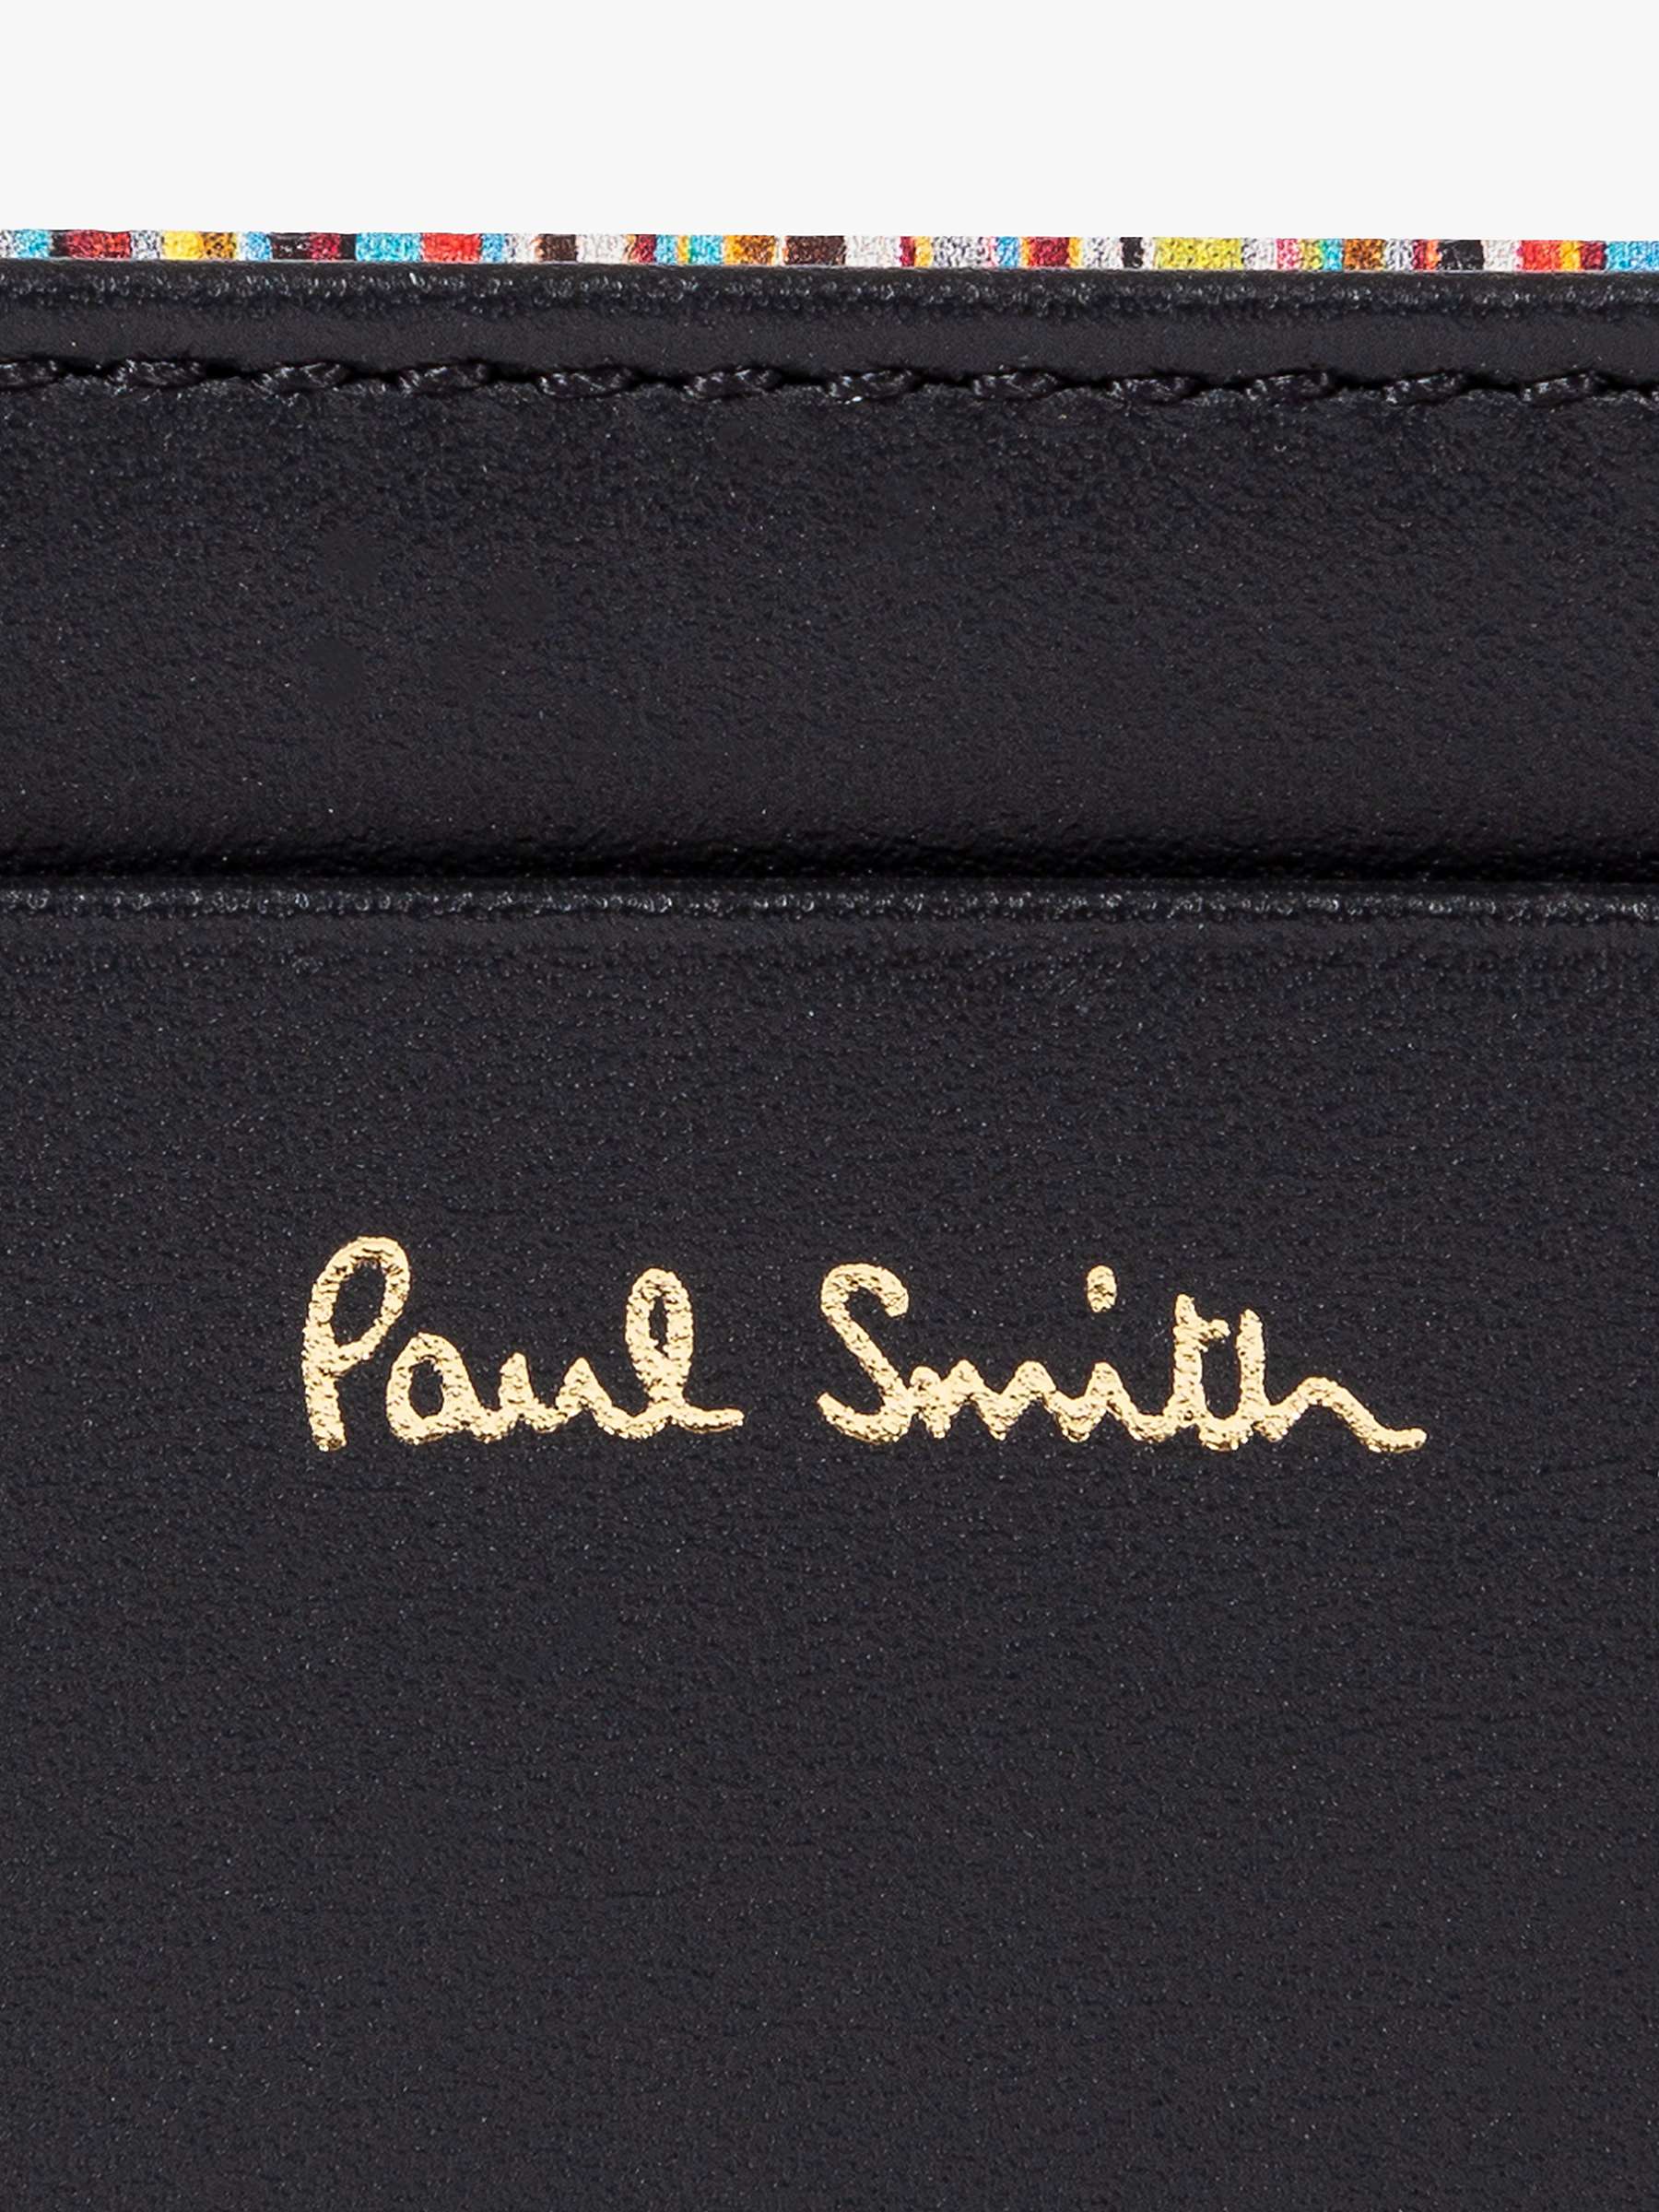 Buy Paul Smith Multi Stripe Leather Cardholder, Black/Multi Online at johnlewis.com